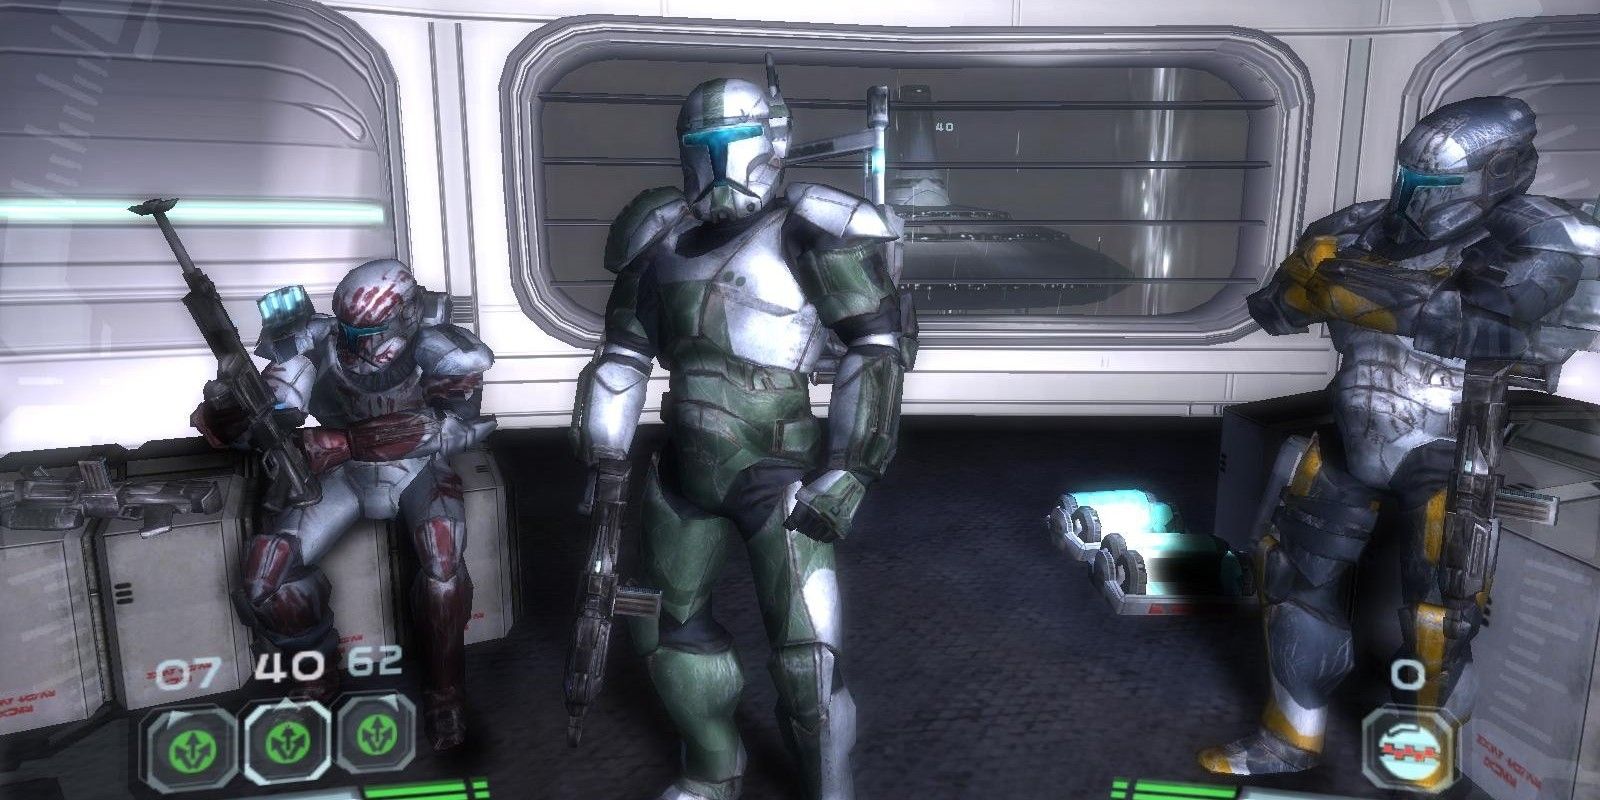 Clone troopers in Republic Commando